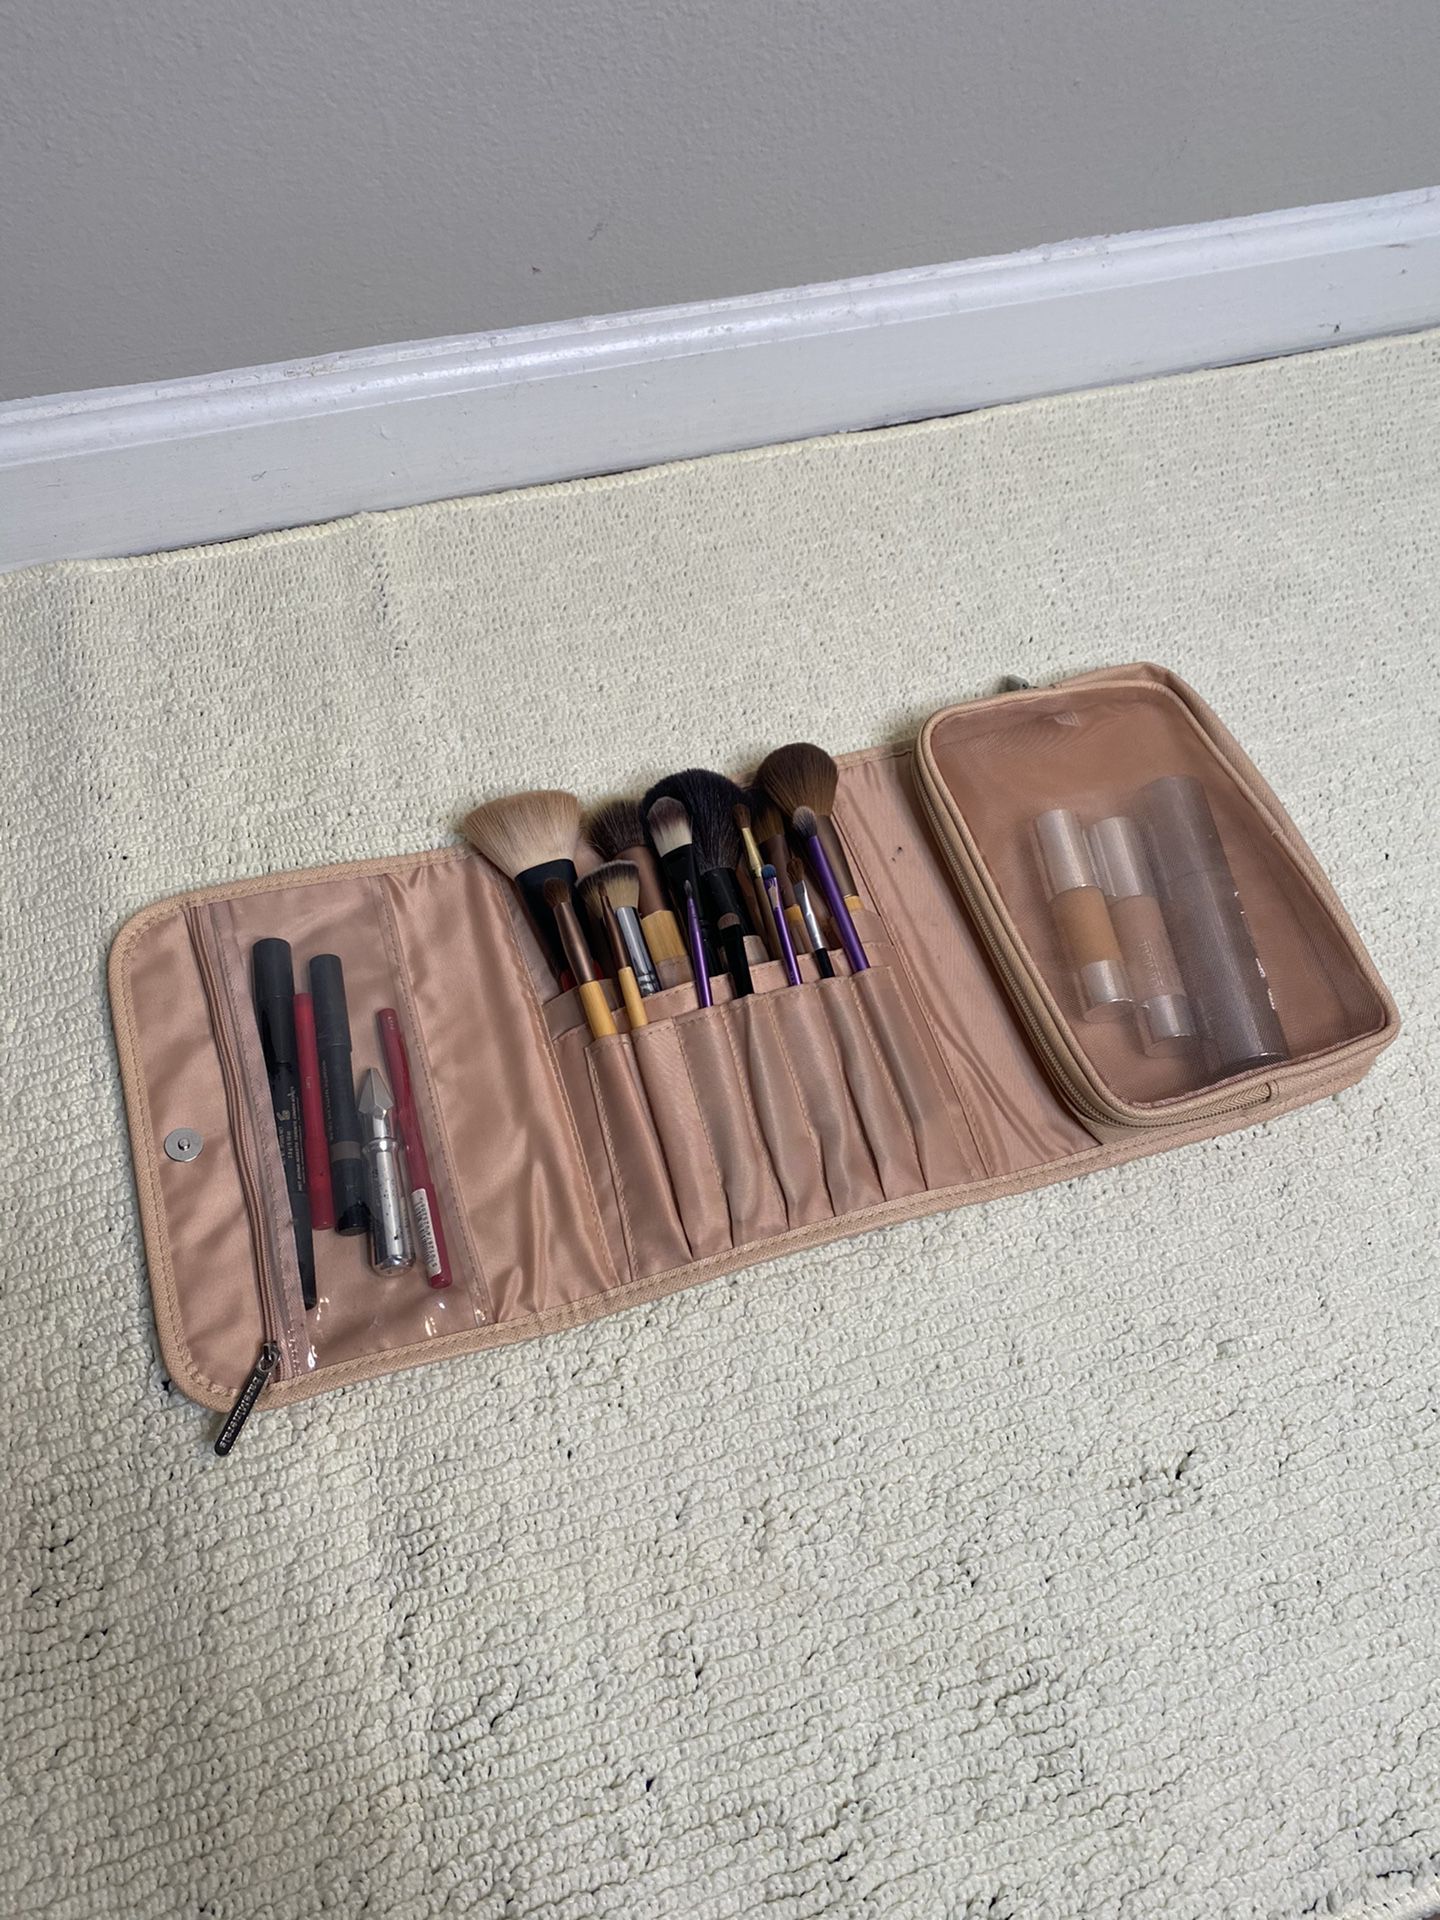 Bare Minerals makeup case